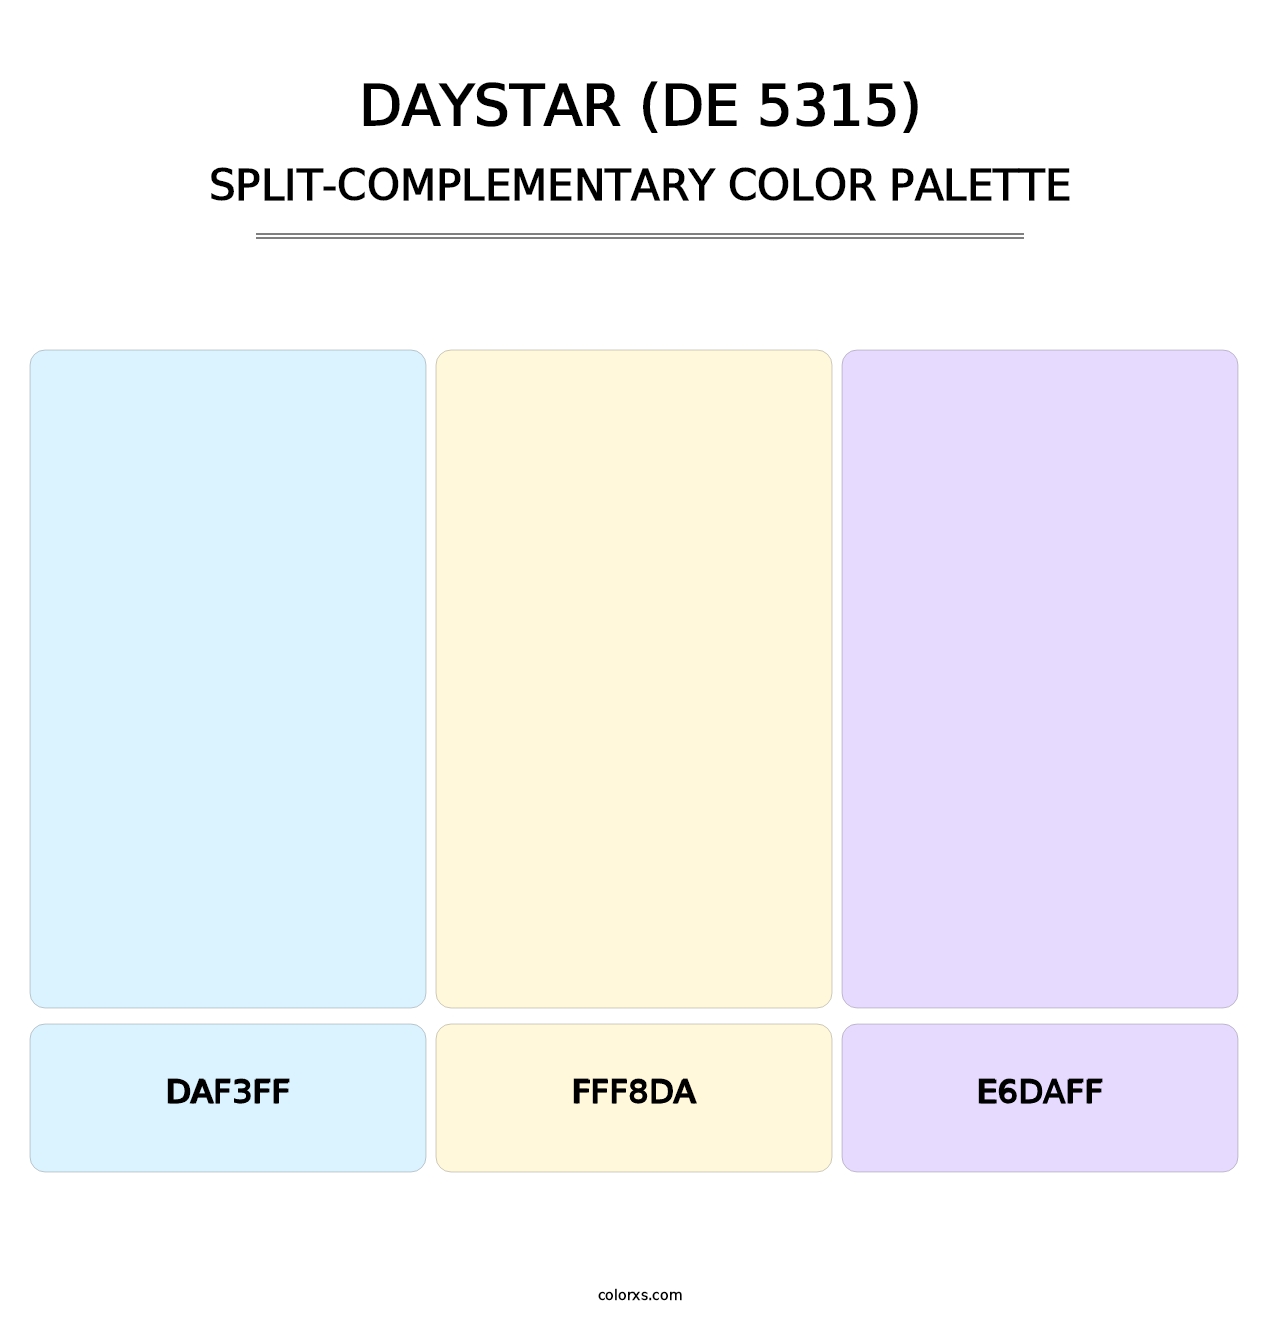 Daystar (DE 5315) - Split-Complementary Color Palette